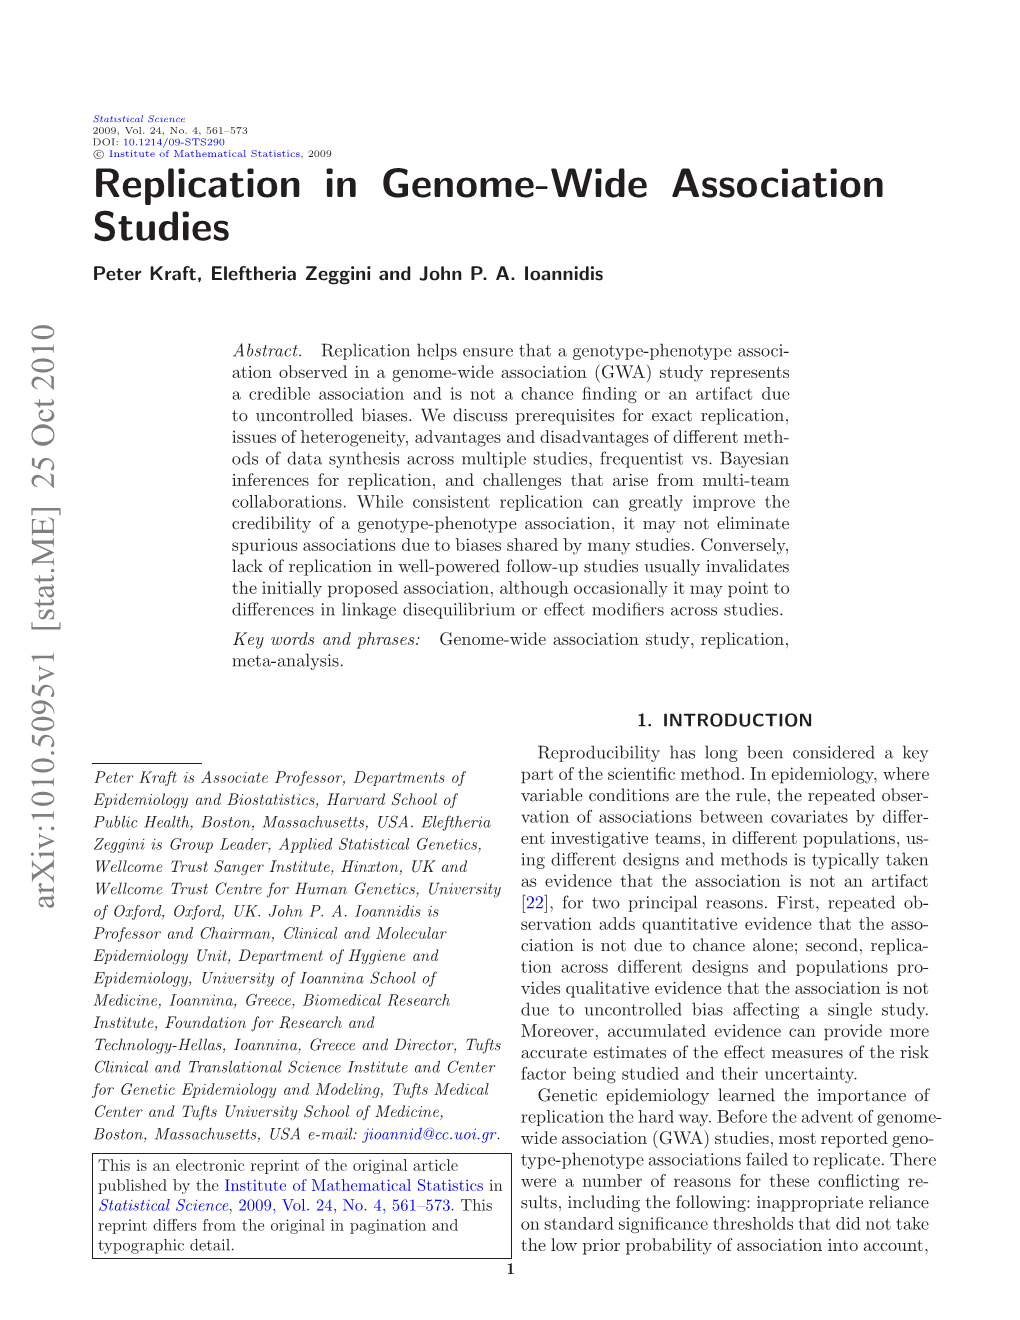 Replication in Genome-Wide Association Studies